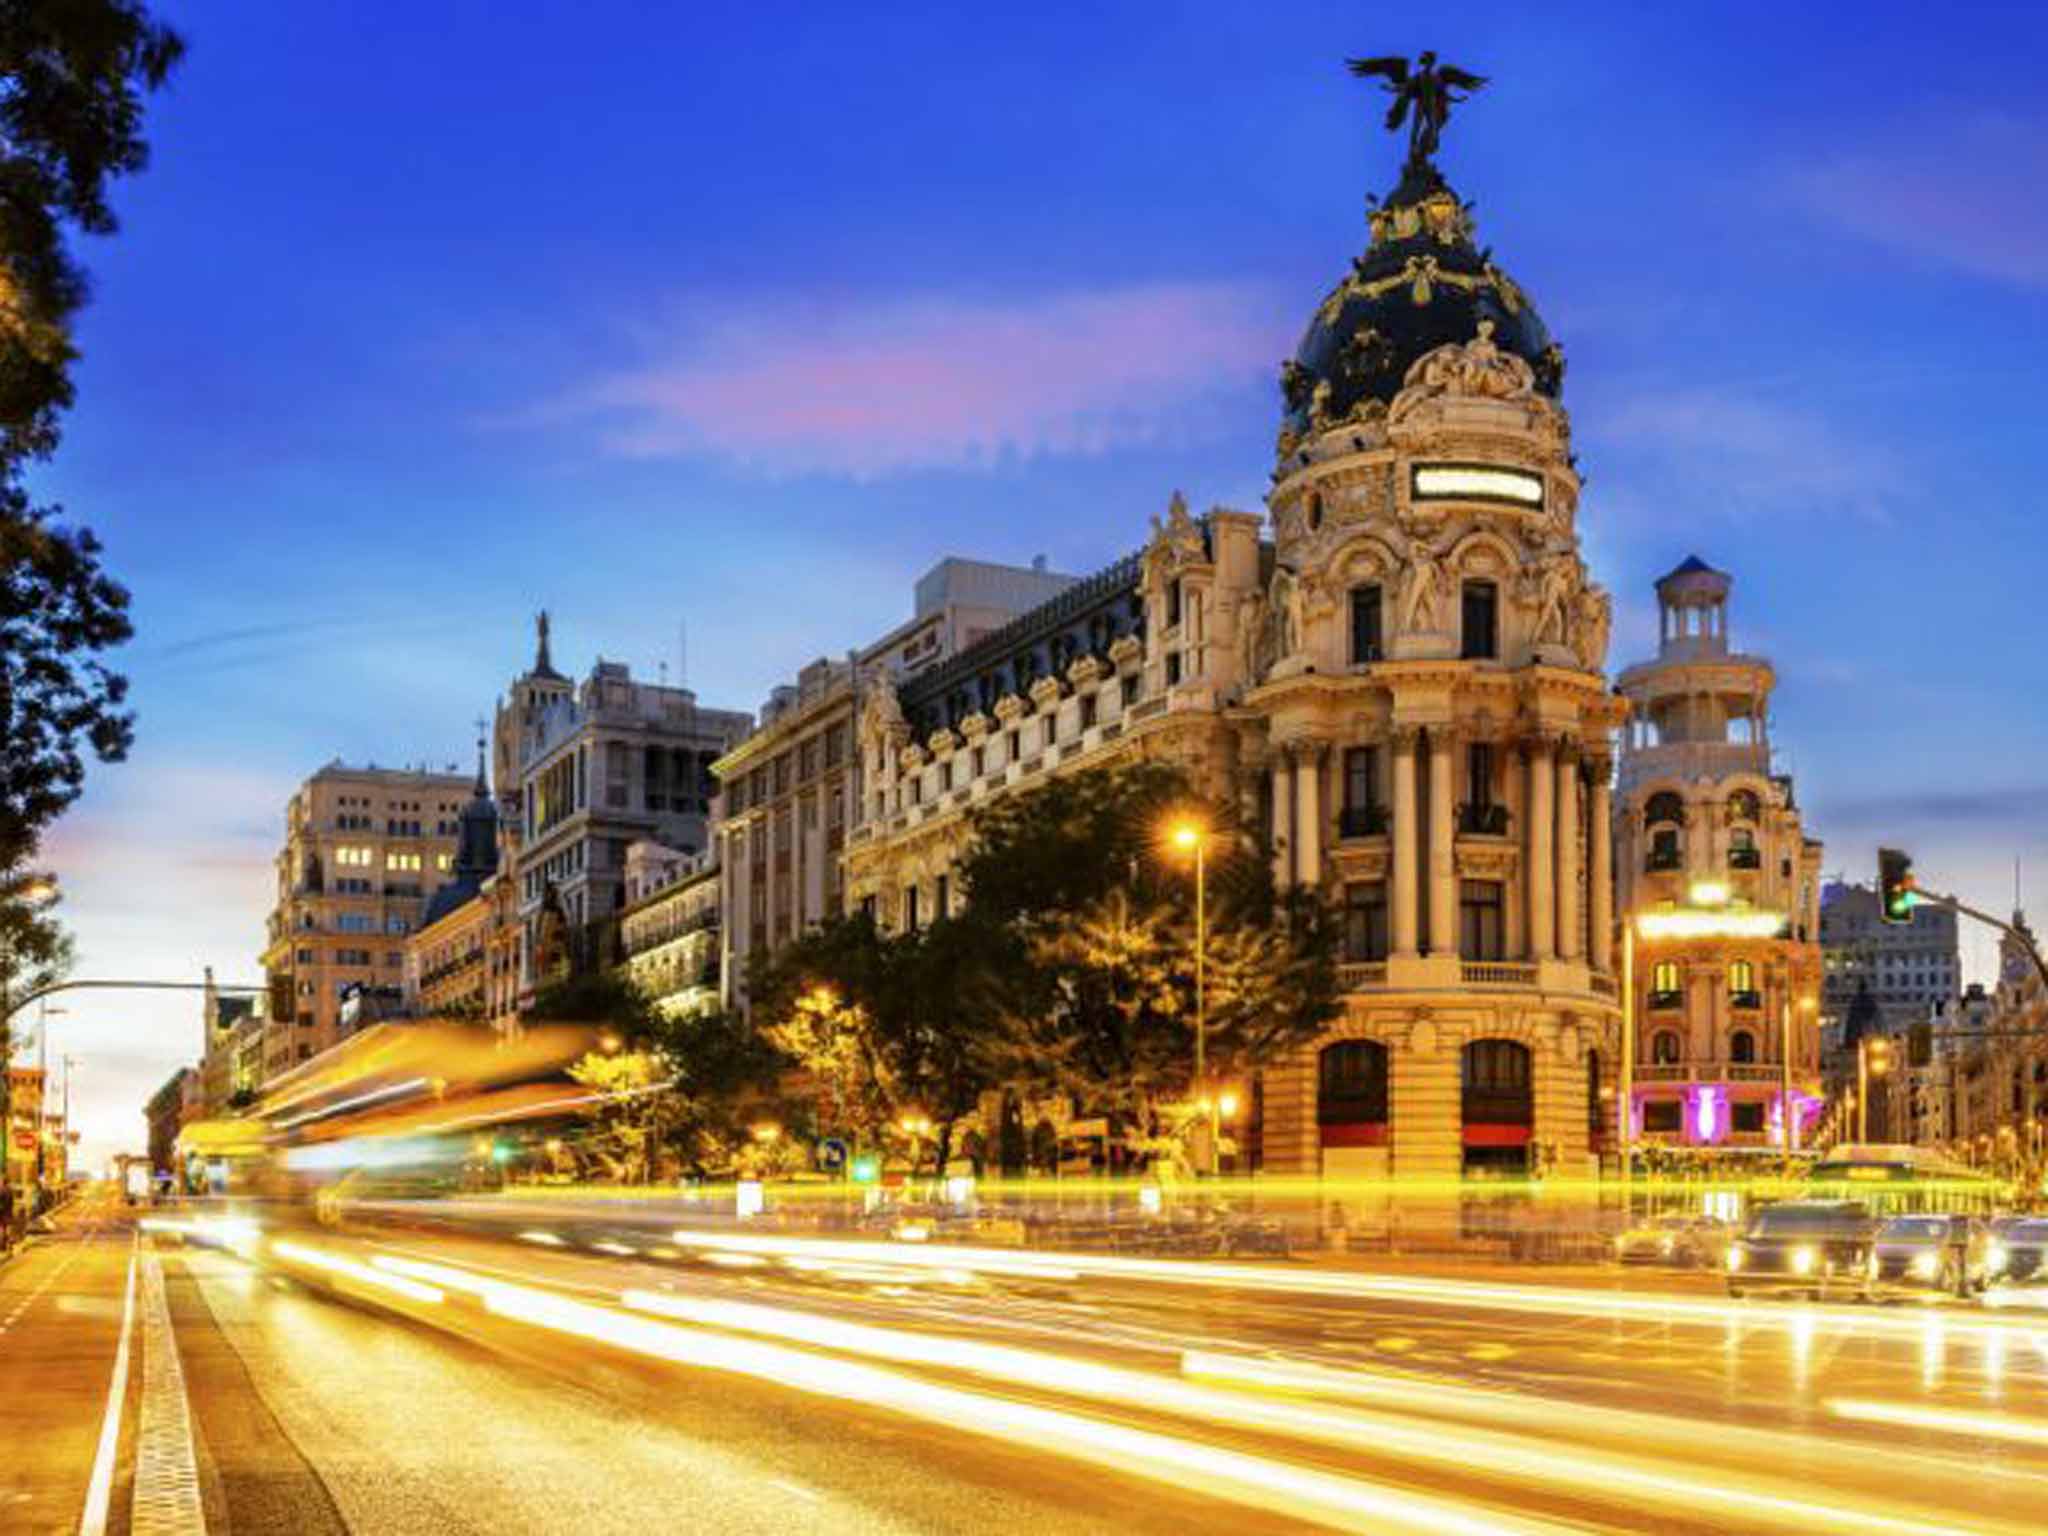 Capital idea: Madrid 'feels like proper Spain'